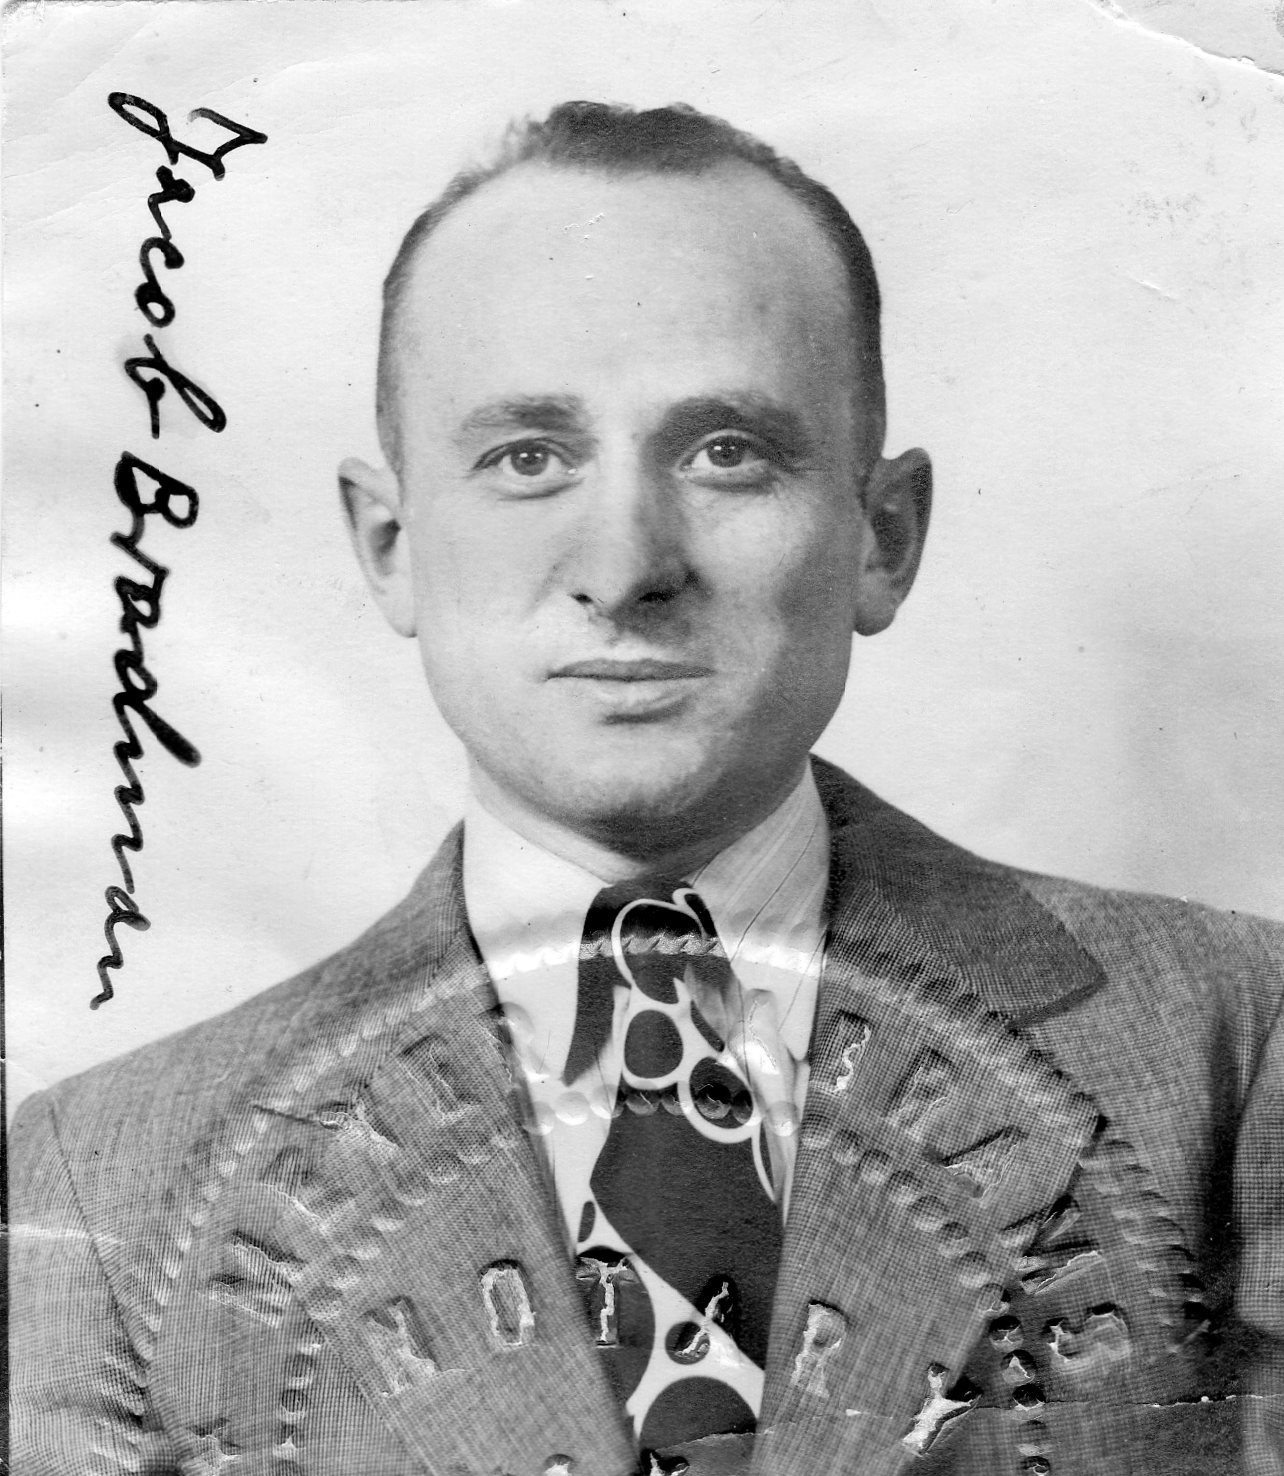 Brodman pictured in his 1946 passport photo.